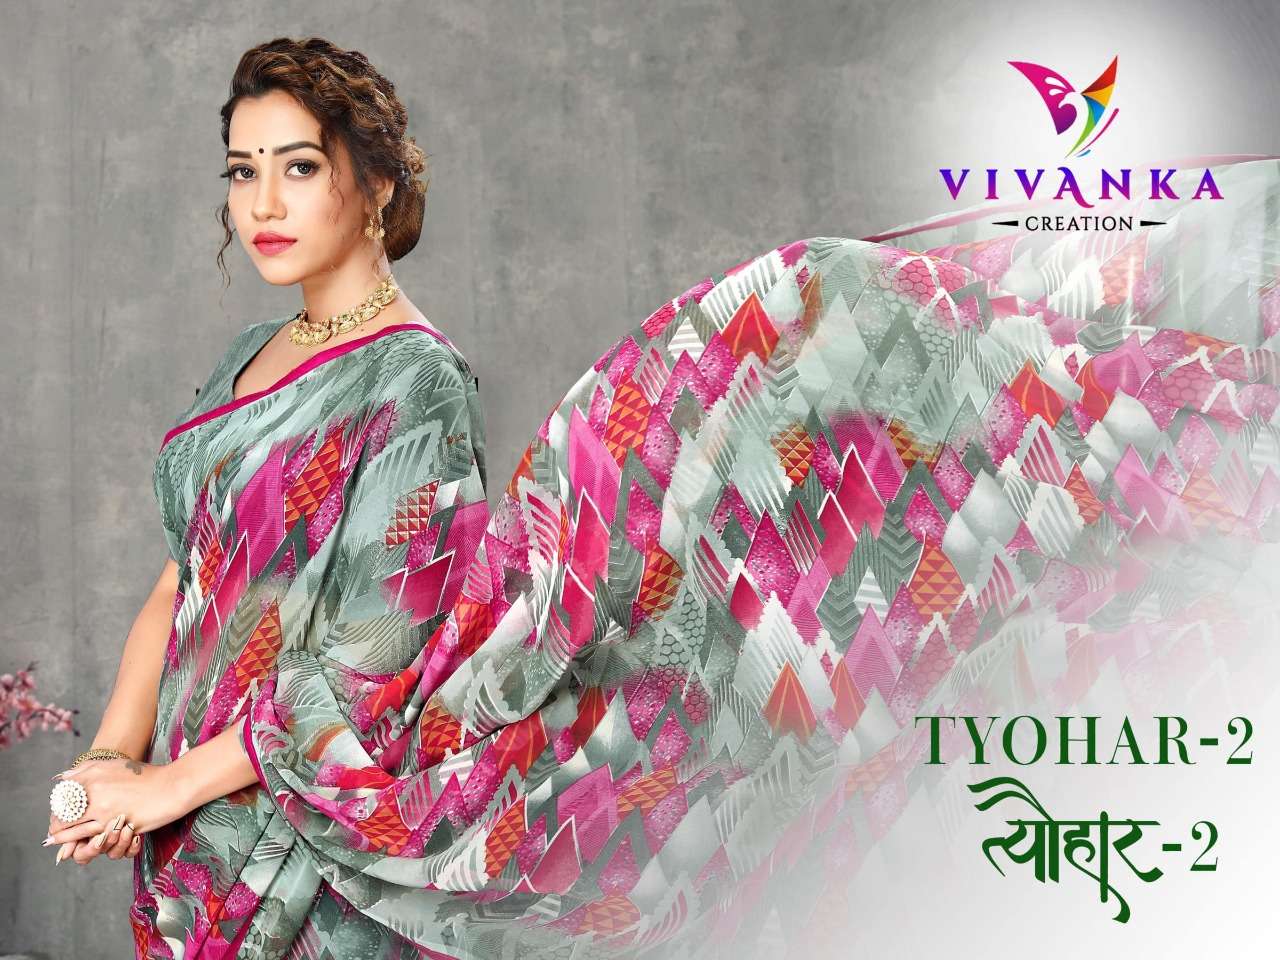 Vivanka Tyohar Vol 2 Printed Georgette Saree Catalog Wholesaler